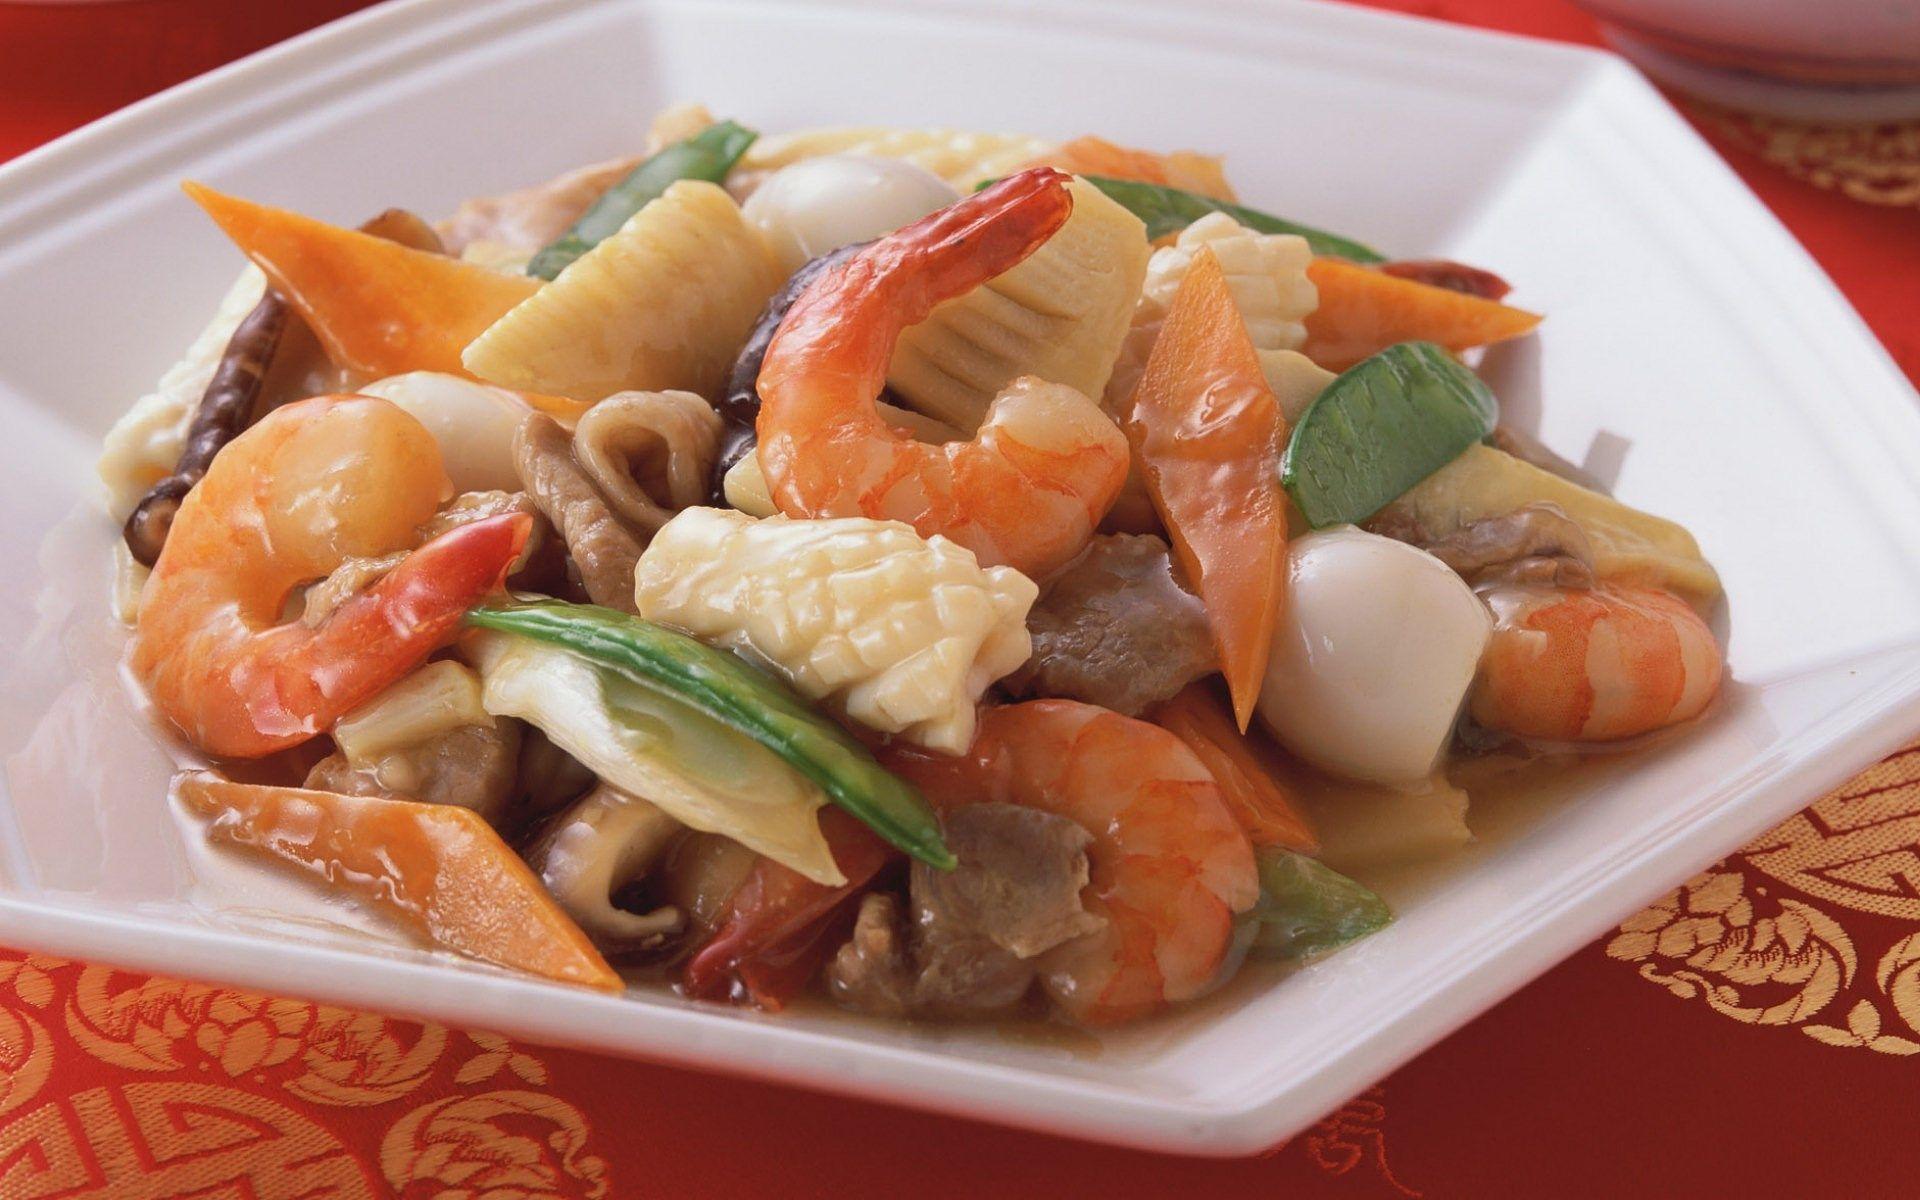 chinese food, Full HD Picture 1920x1200. hueputalo